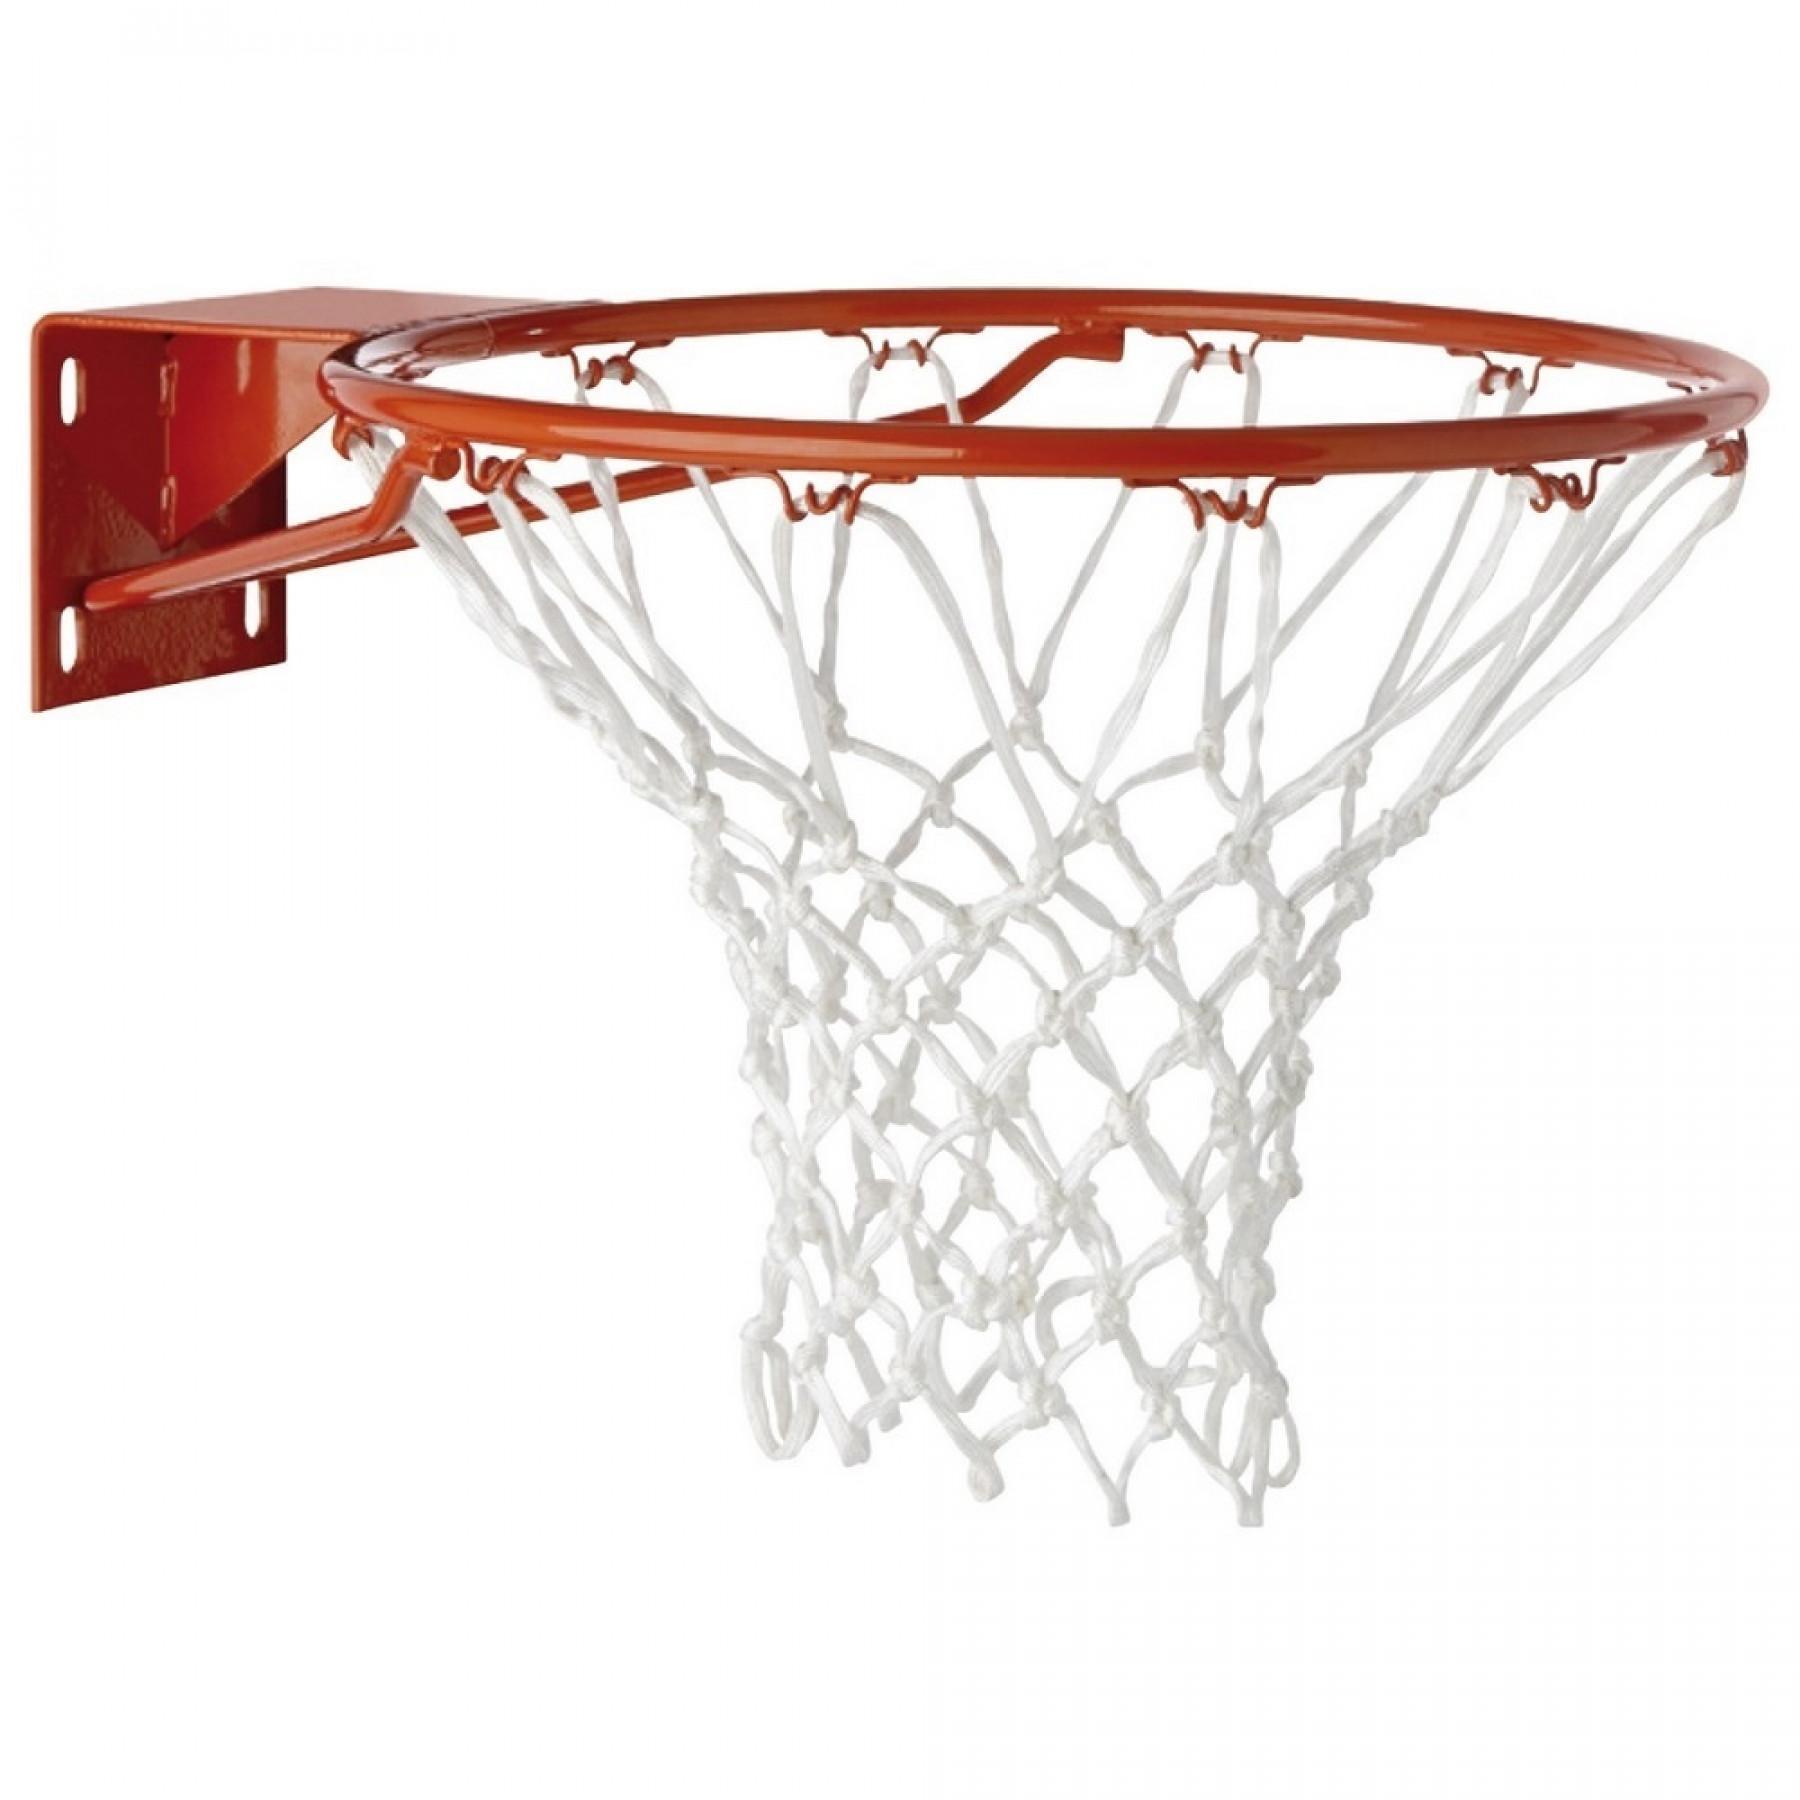 Rede de basquetebol 6 mm tremblay (x2)